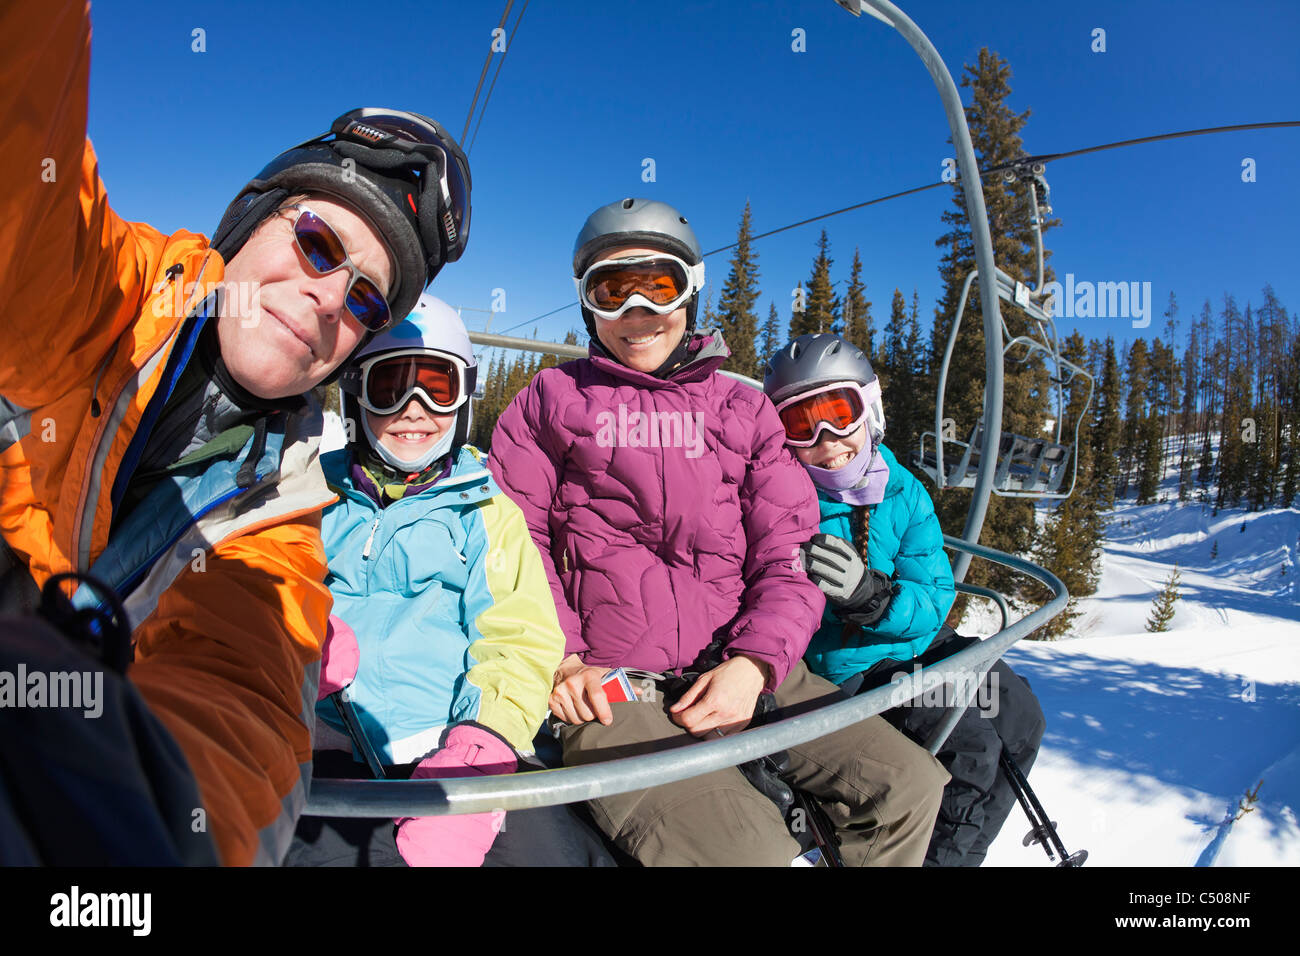 Family riding ski lift together Stock Photo